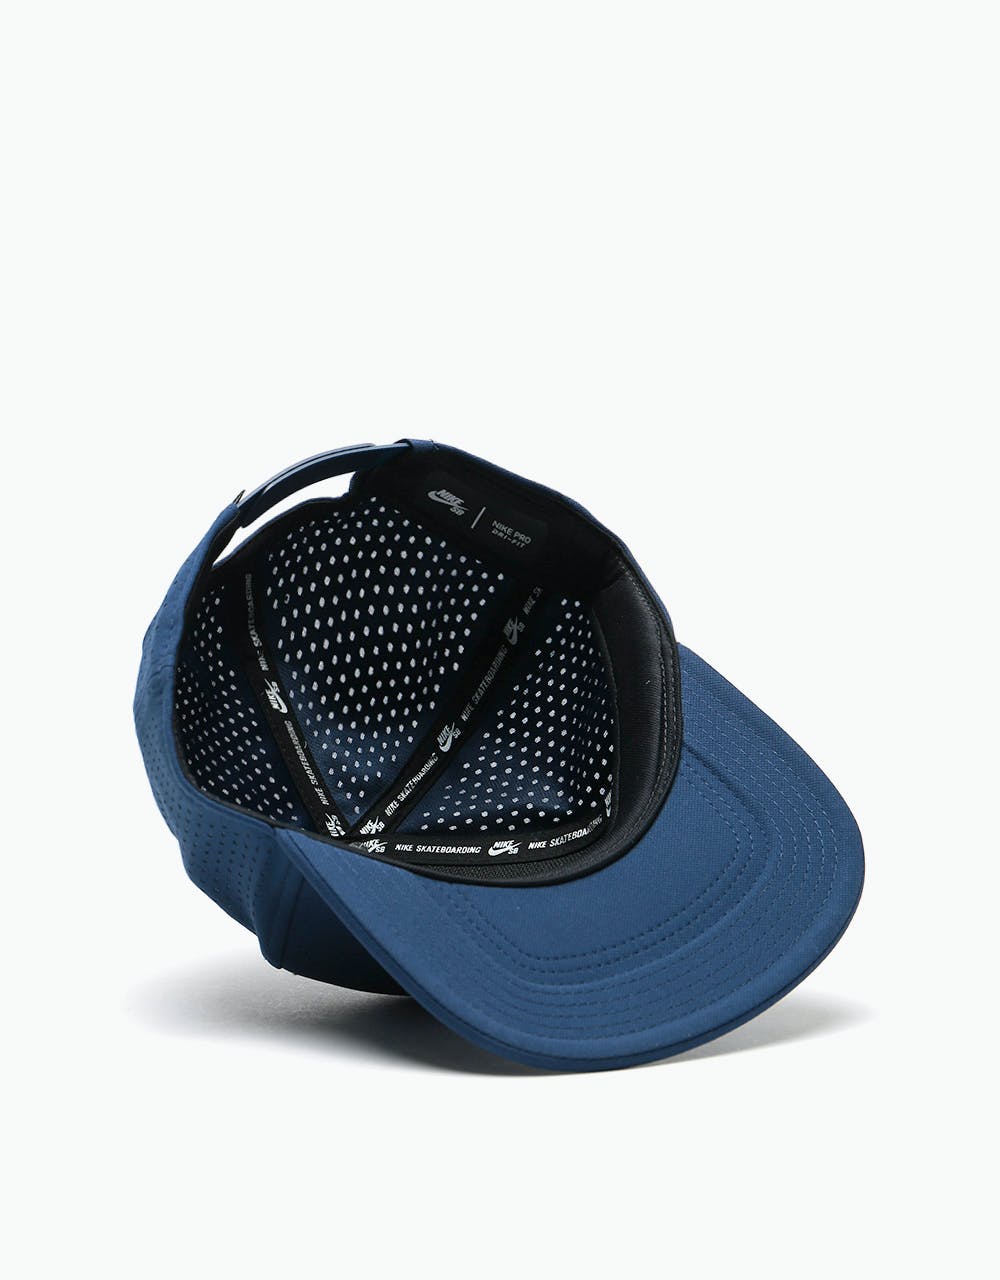 Nike SB Aerobill Pro 2.0 Snapback Cap - Midnight Navy/University Red